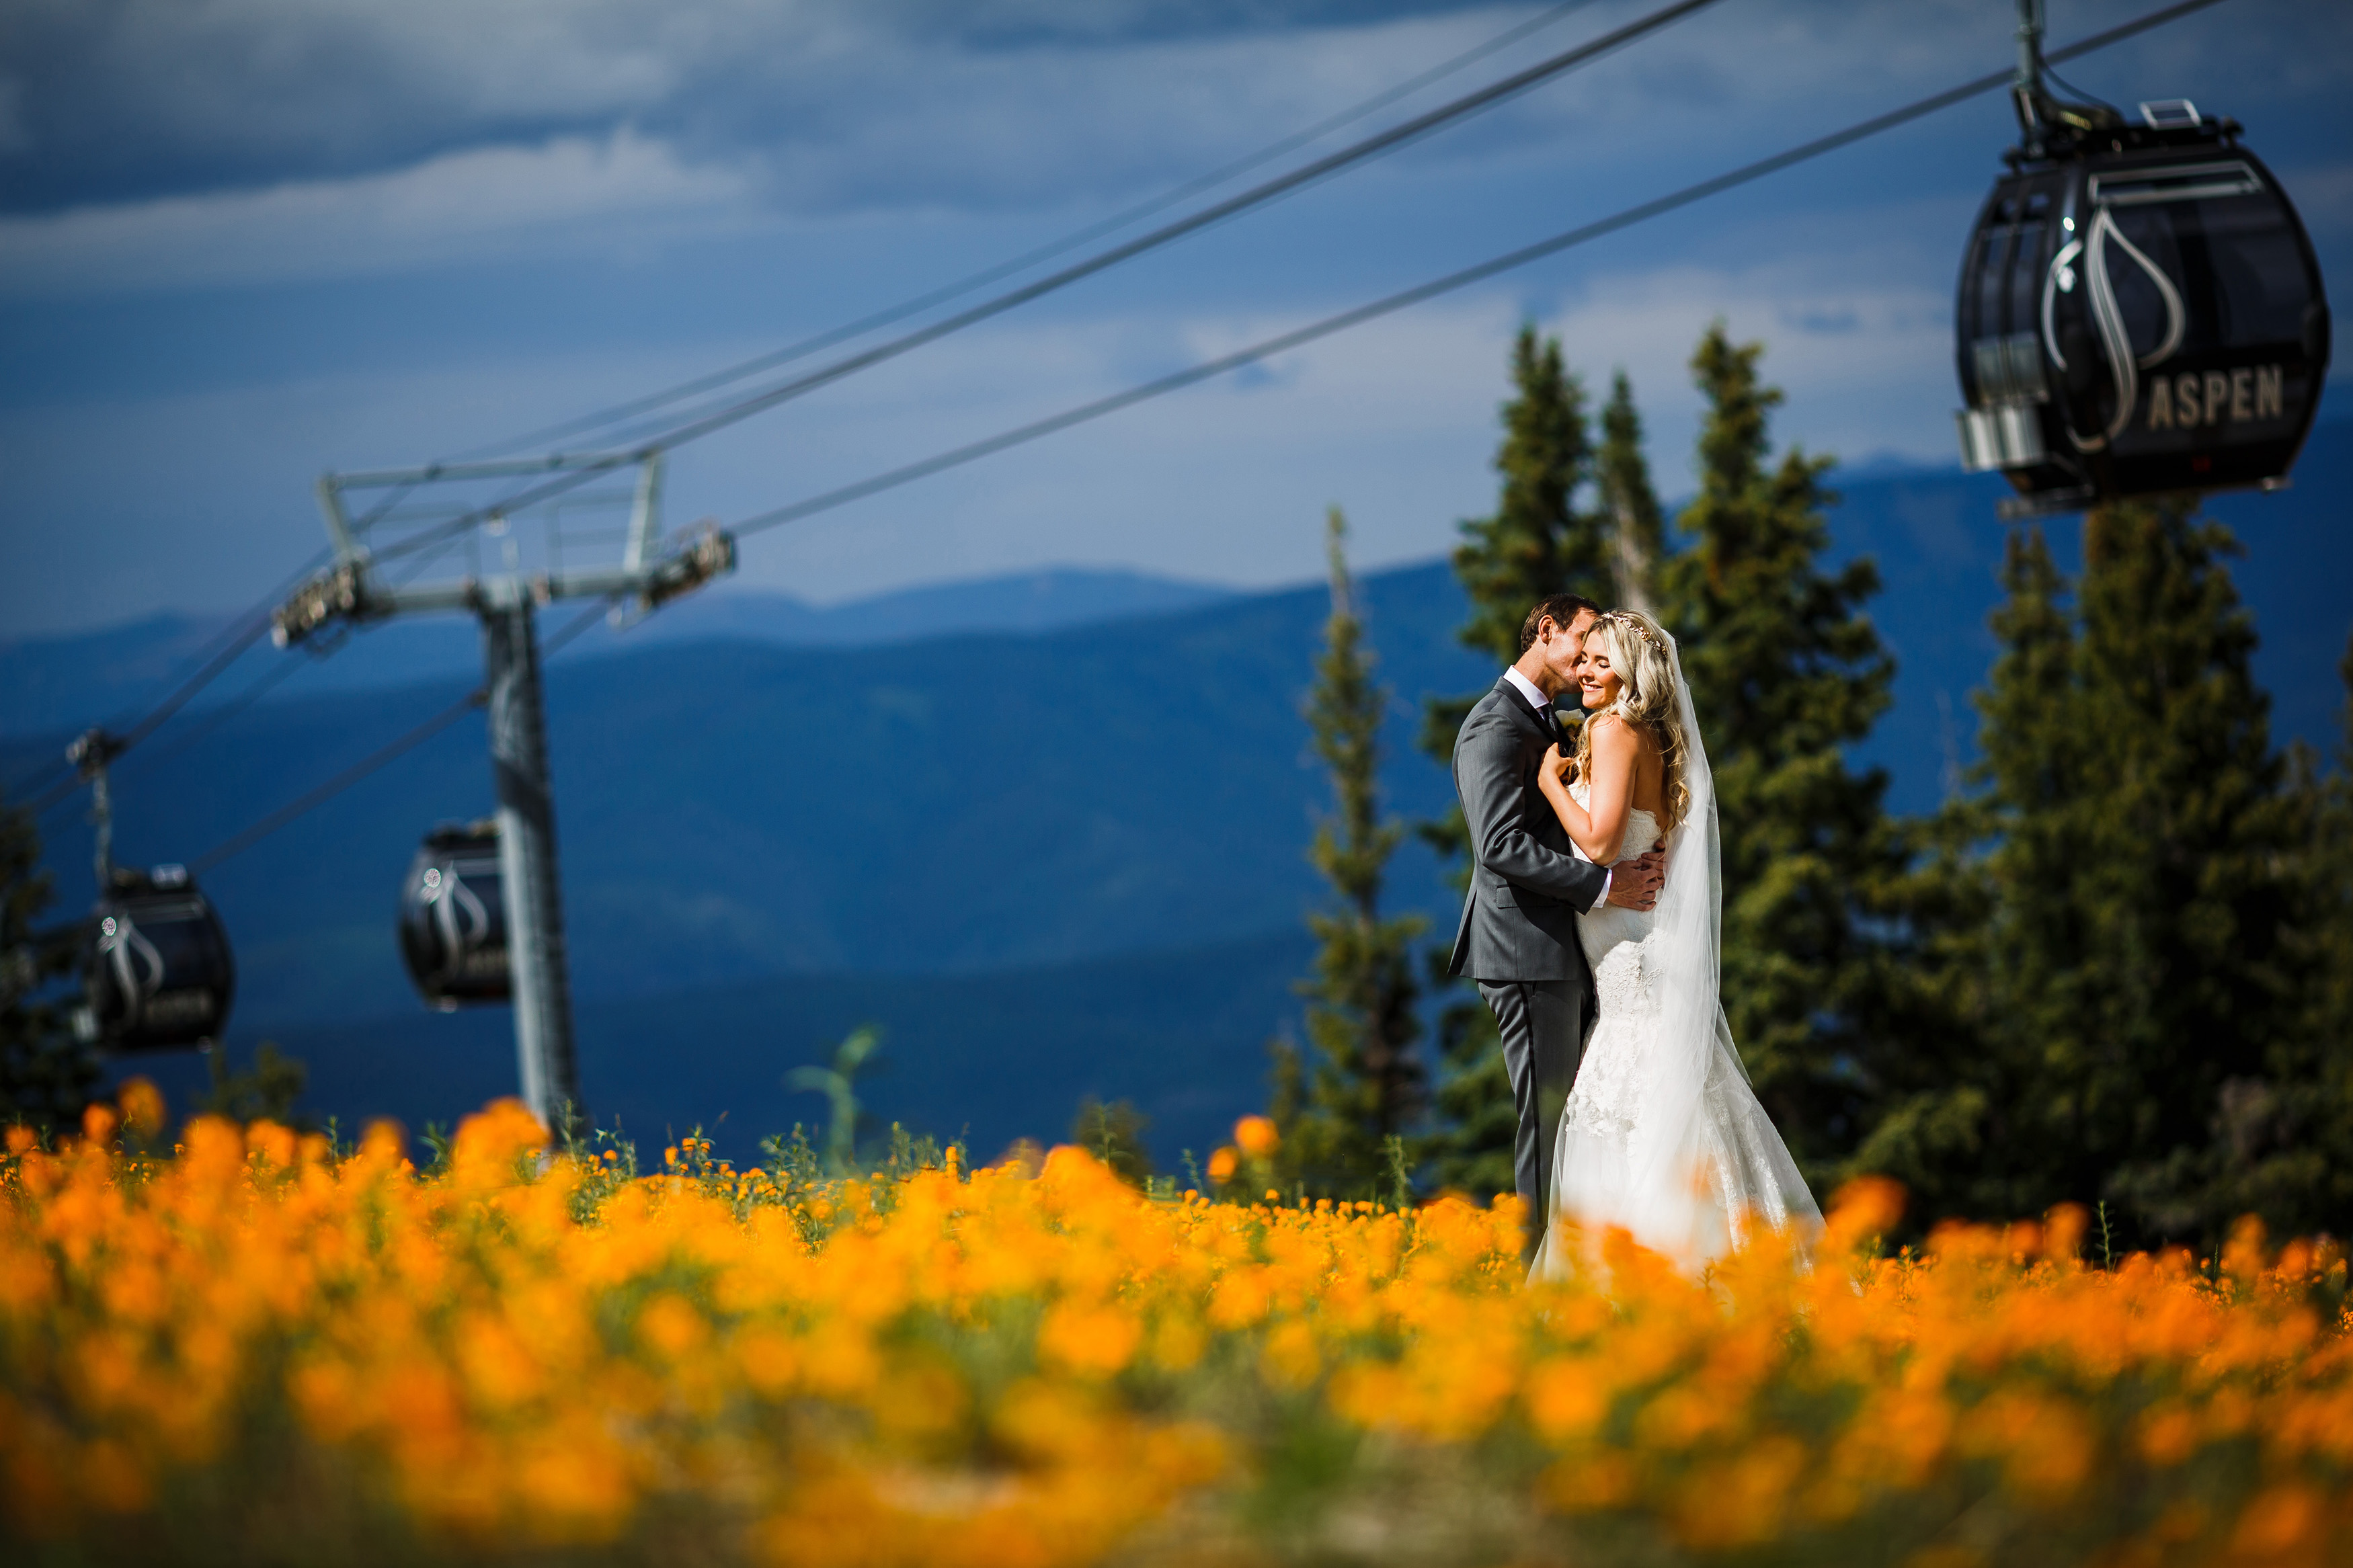 Bride and Groom in field of Wildflowers at Aspen Wedding Deck in Aspen, CO